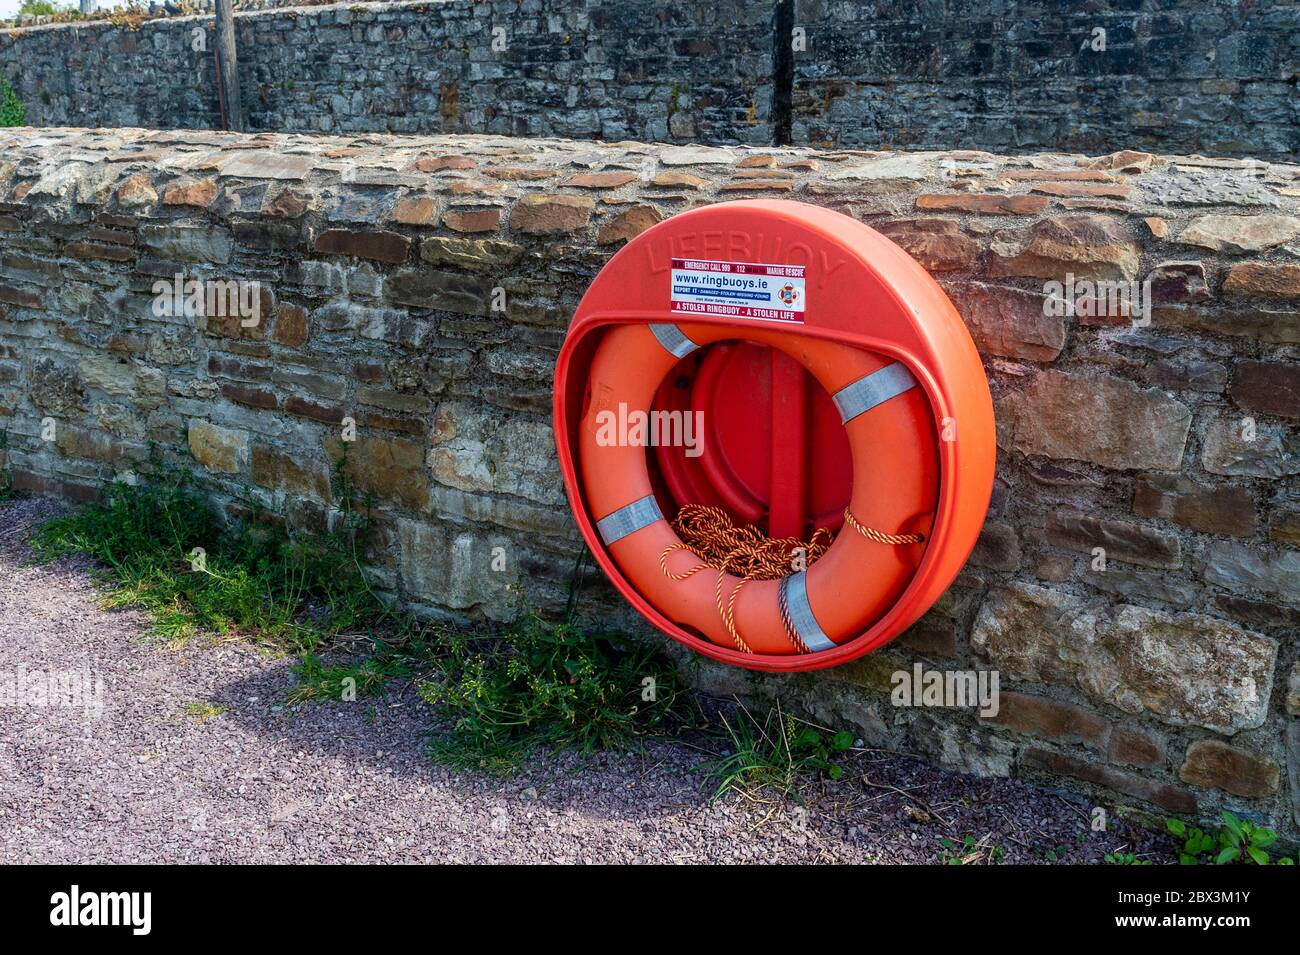 Lifebuoy/Riverside Lifesaving Equipment next to a River. Stock Photo